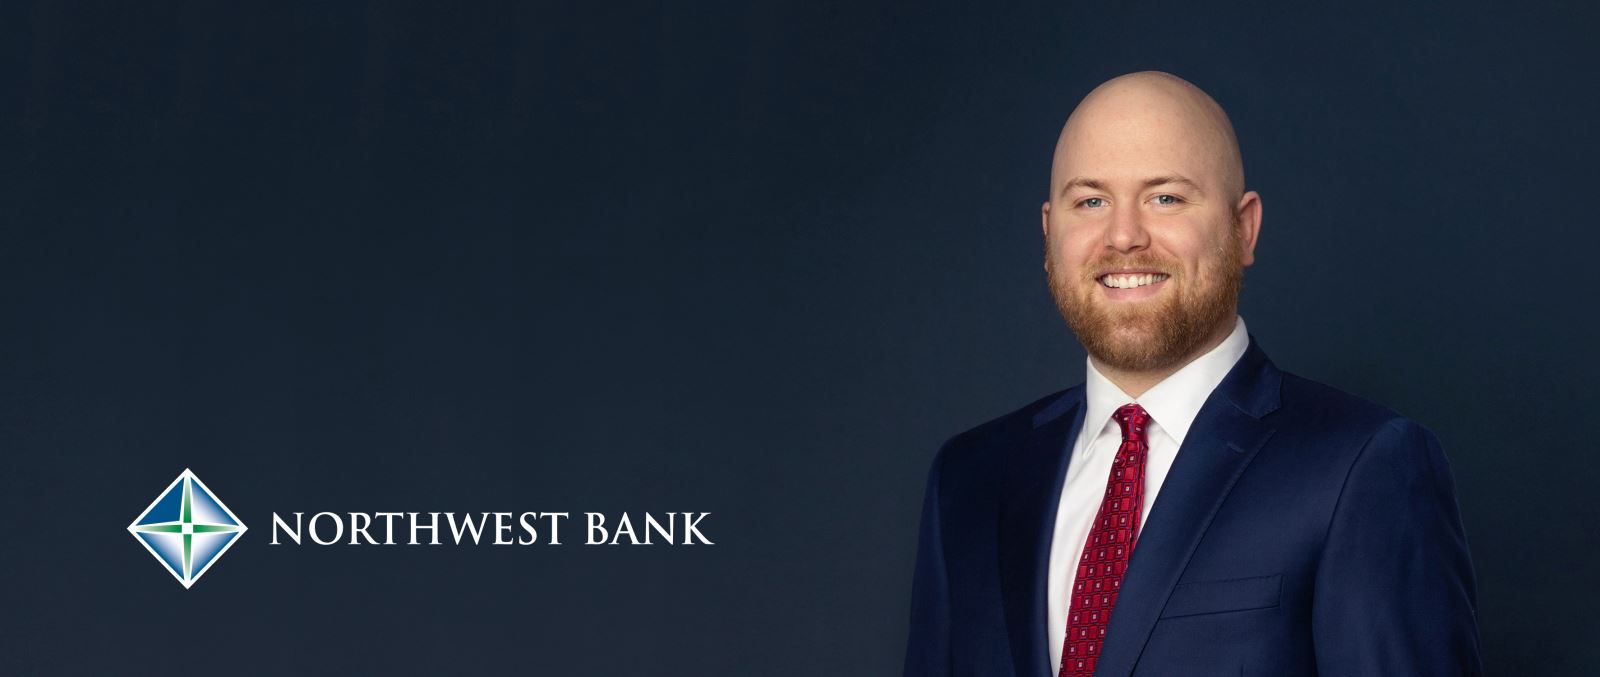 Northwest Bank logo and photo of Sam Schade